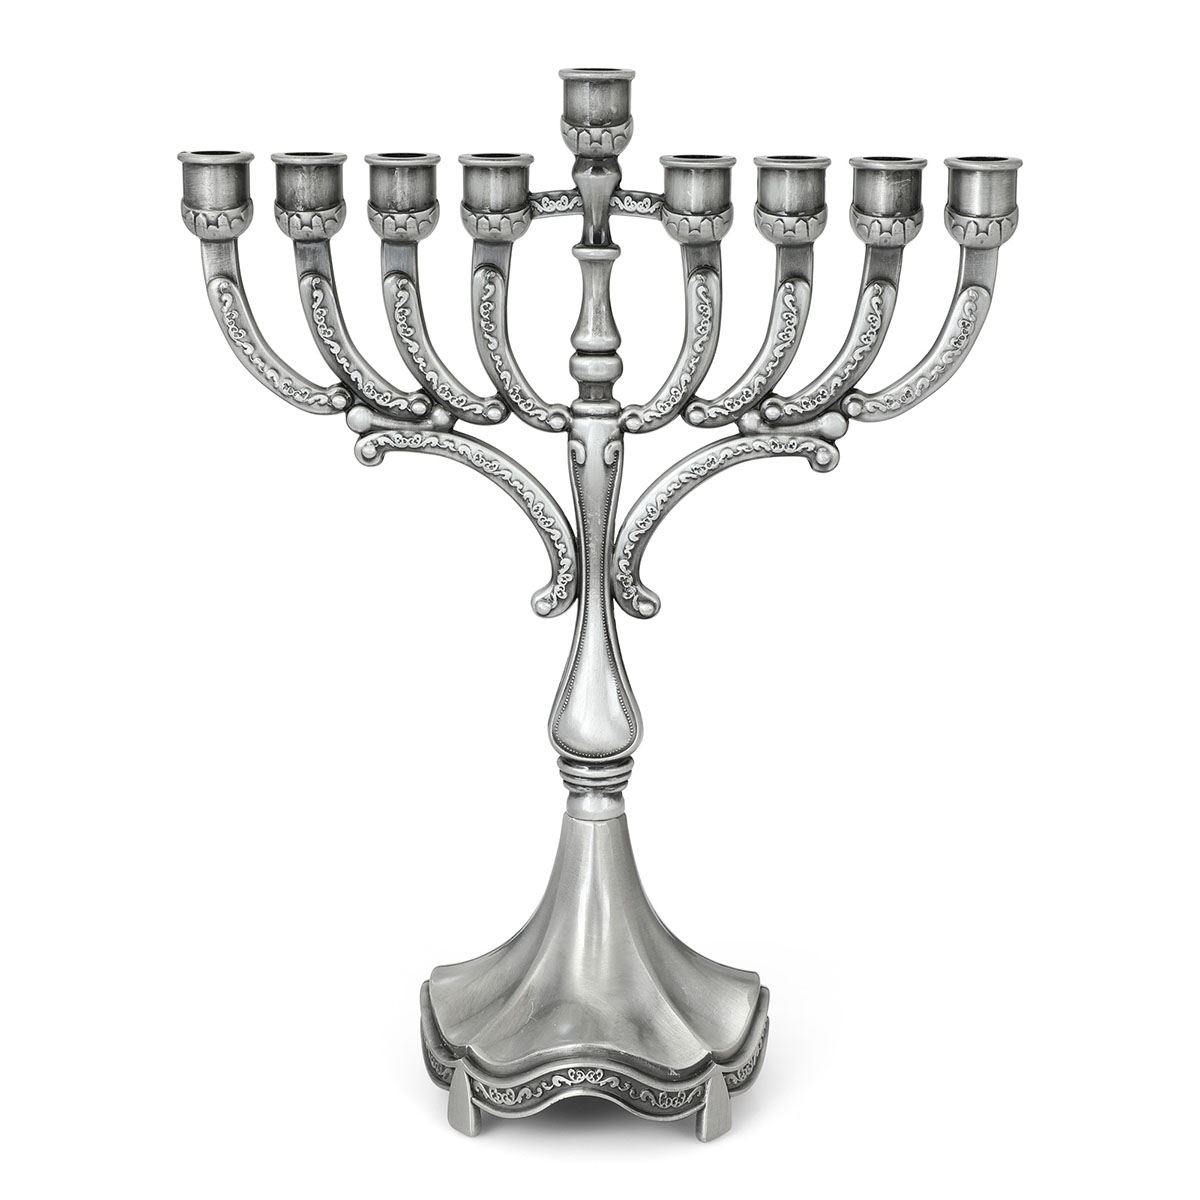 Ornate Hanukkah Menorah With Jerusalem Motif - 1